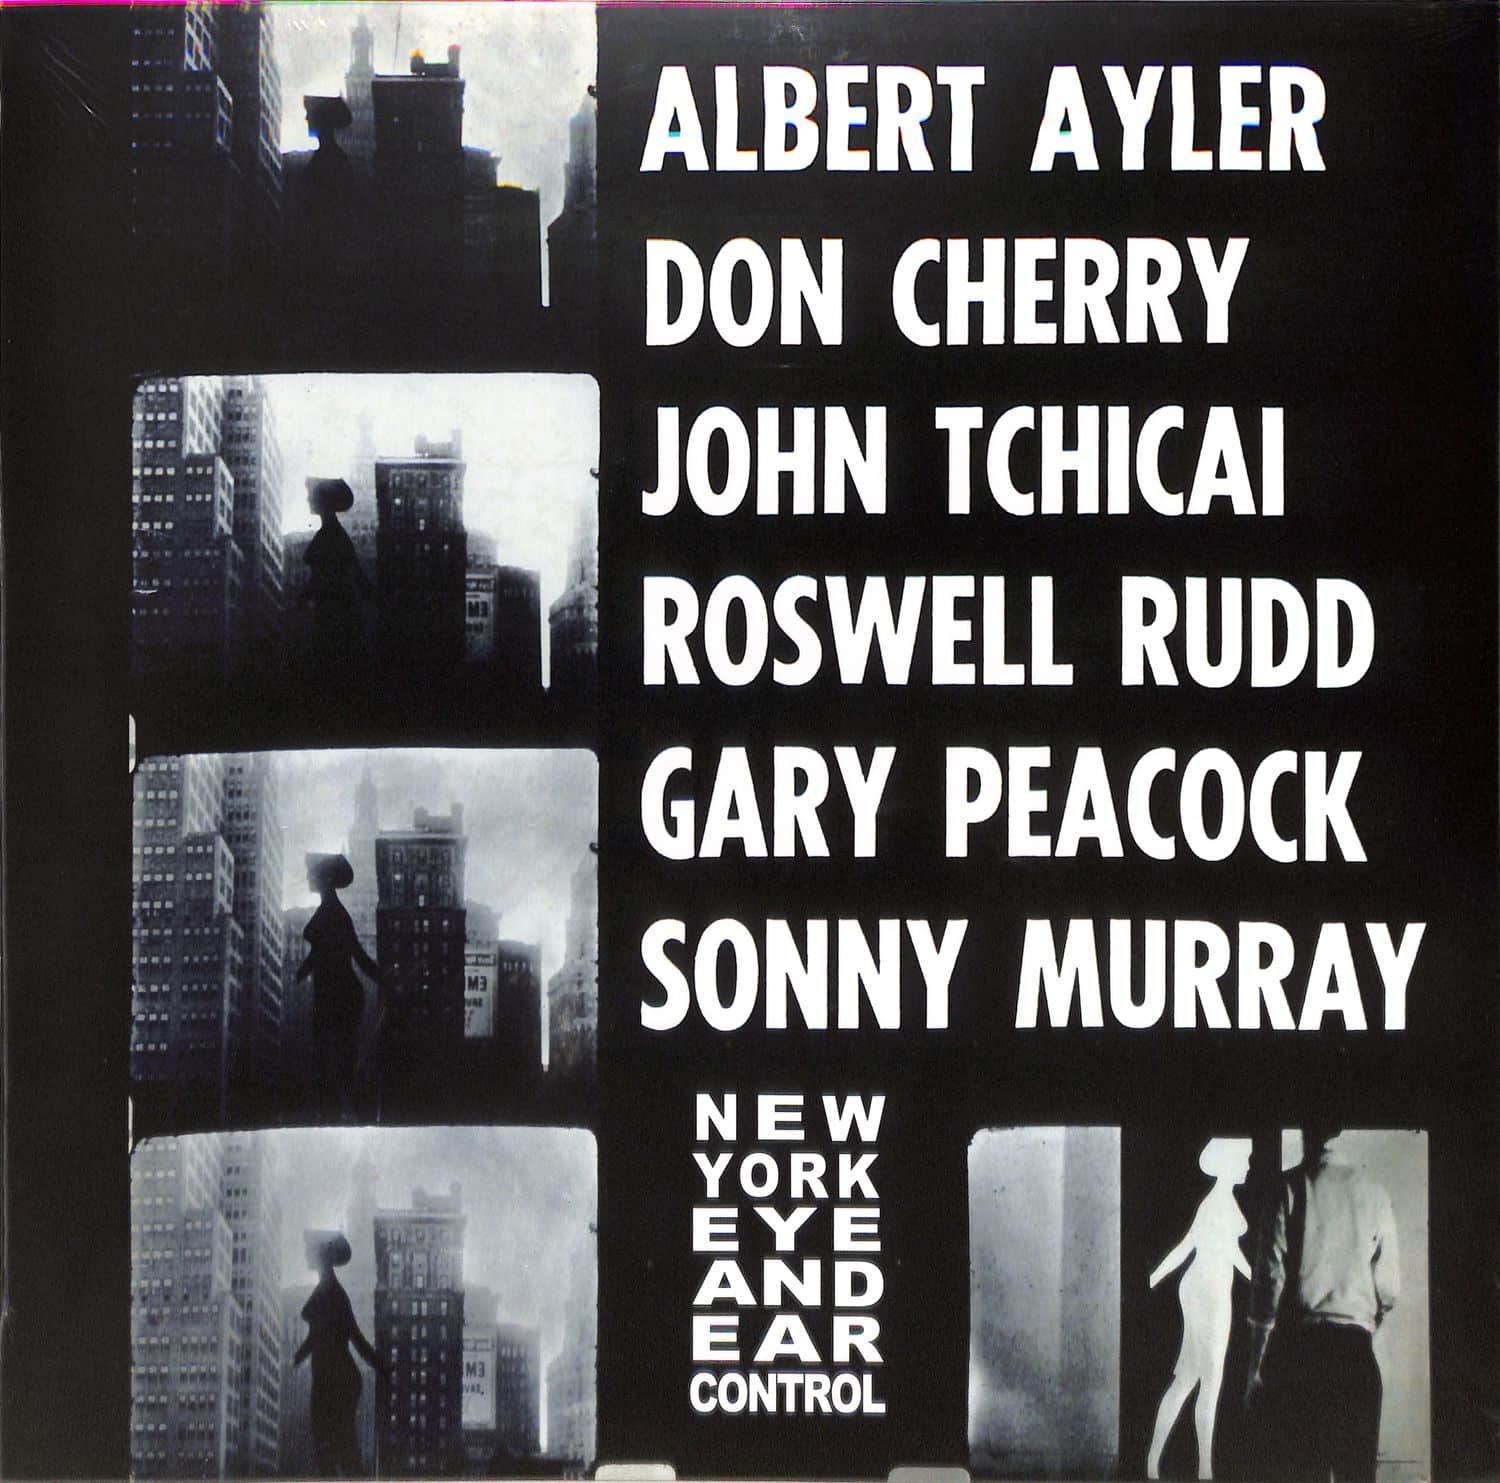 Albert Ayler / Don Cherry - NEW YORK EYE AND EAR CONTROL 